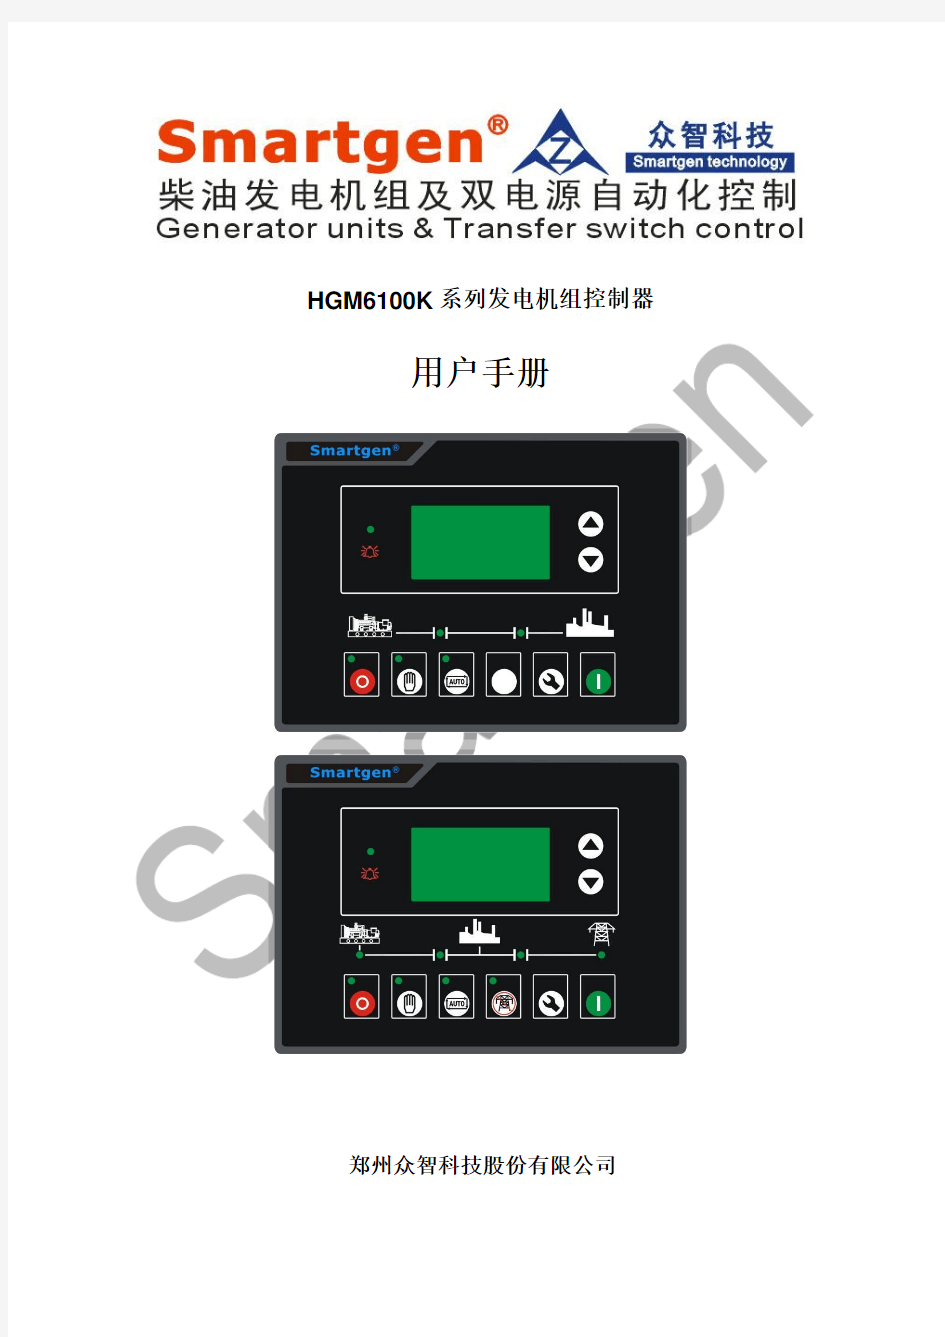 HGM6110K发电机组控制器说明书1.6版本